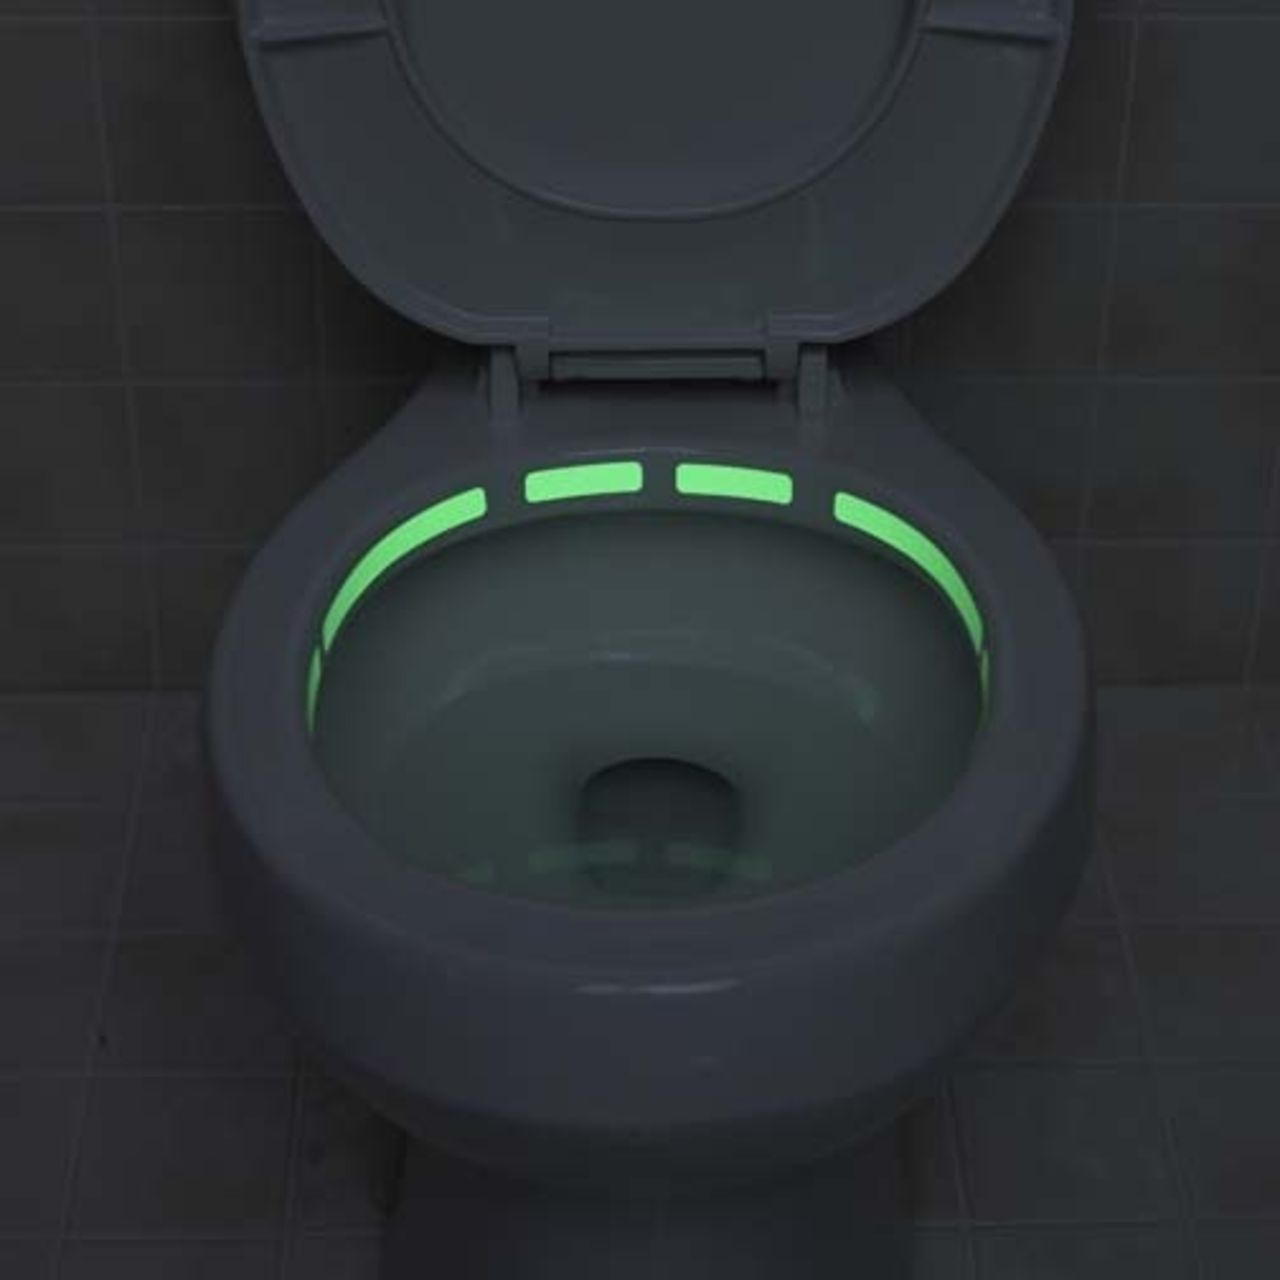 Led Lights To Illuminate The Toilet